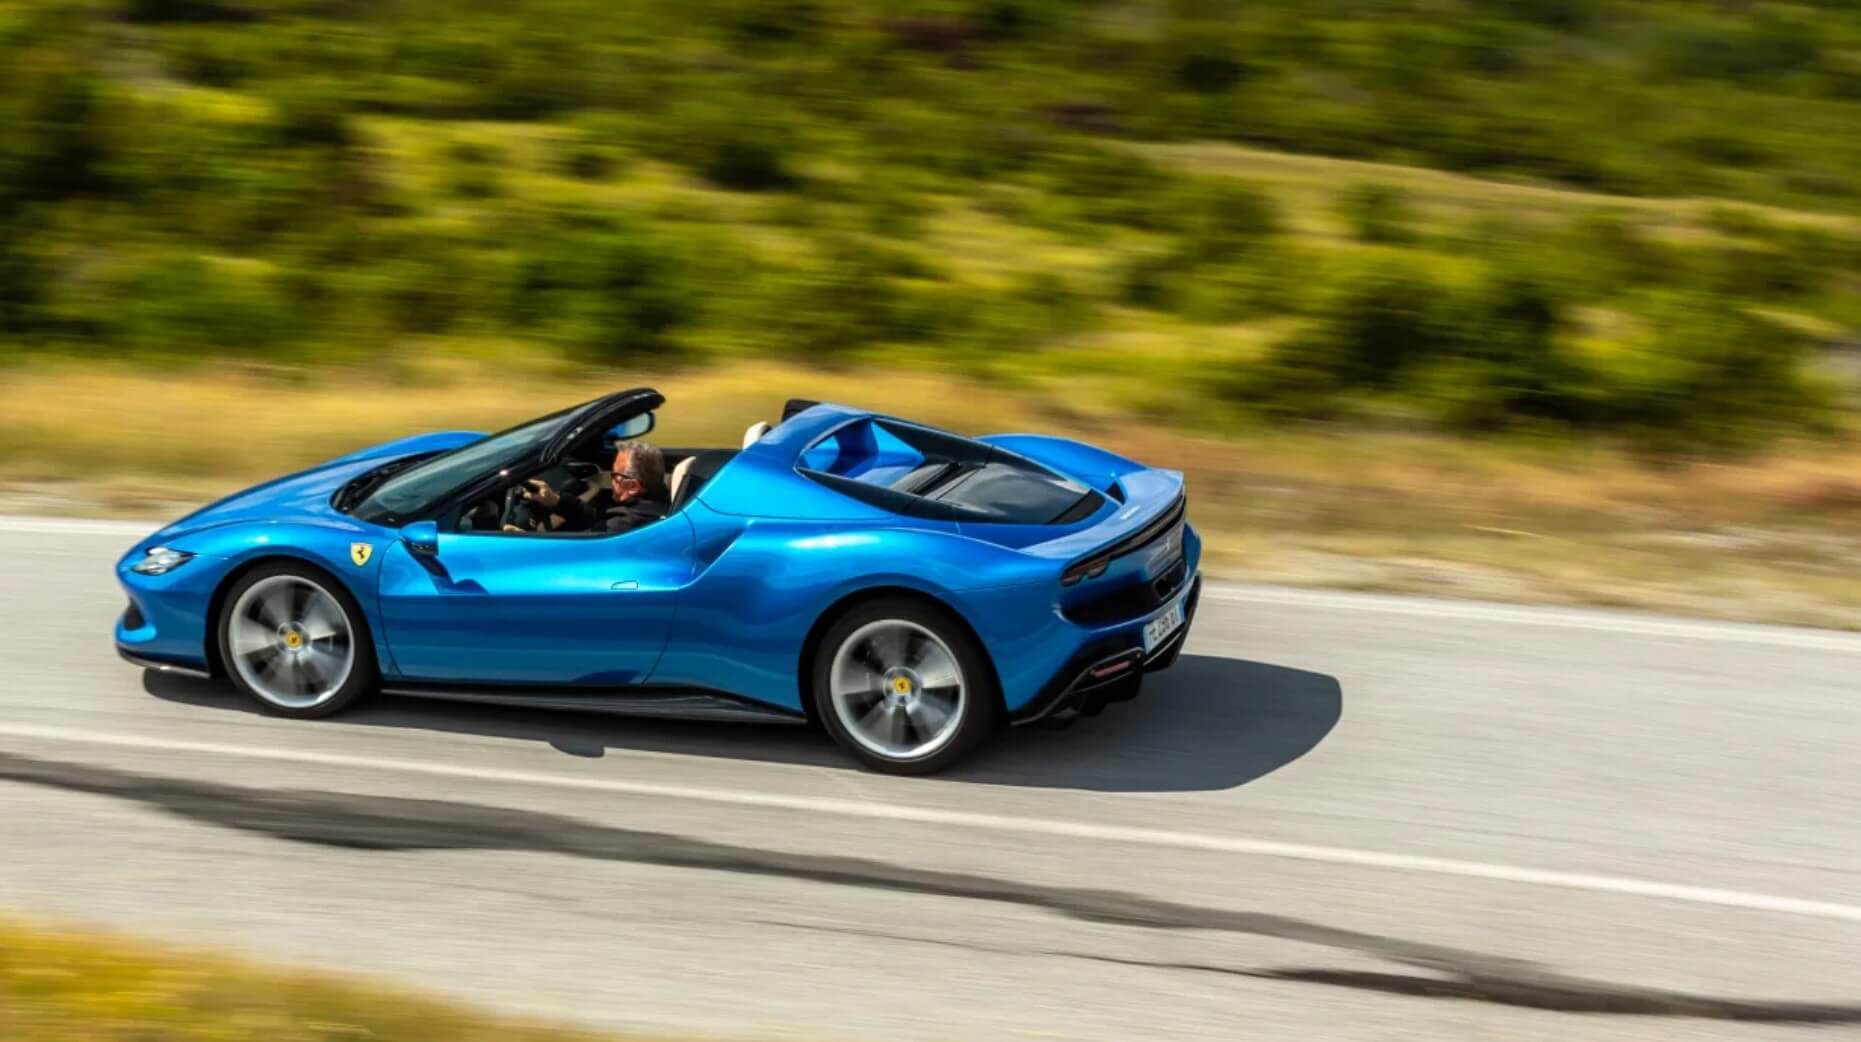 aria-label="Ferrari 296 GTS blue 7"